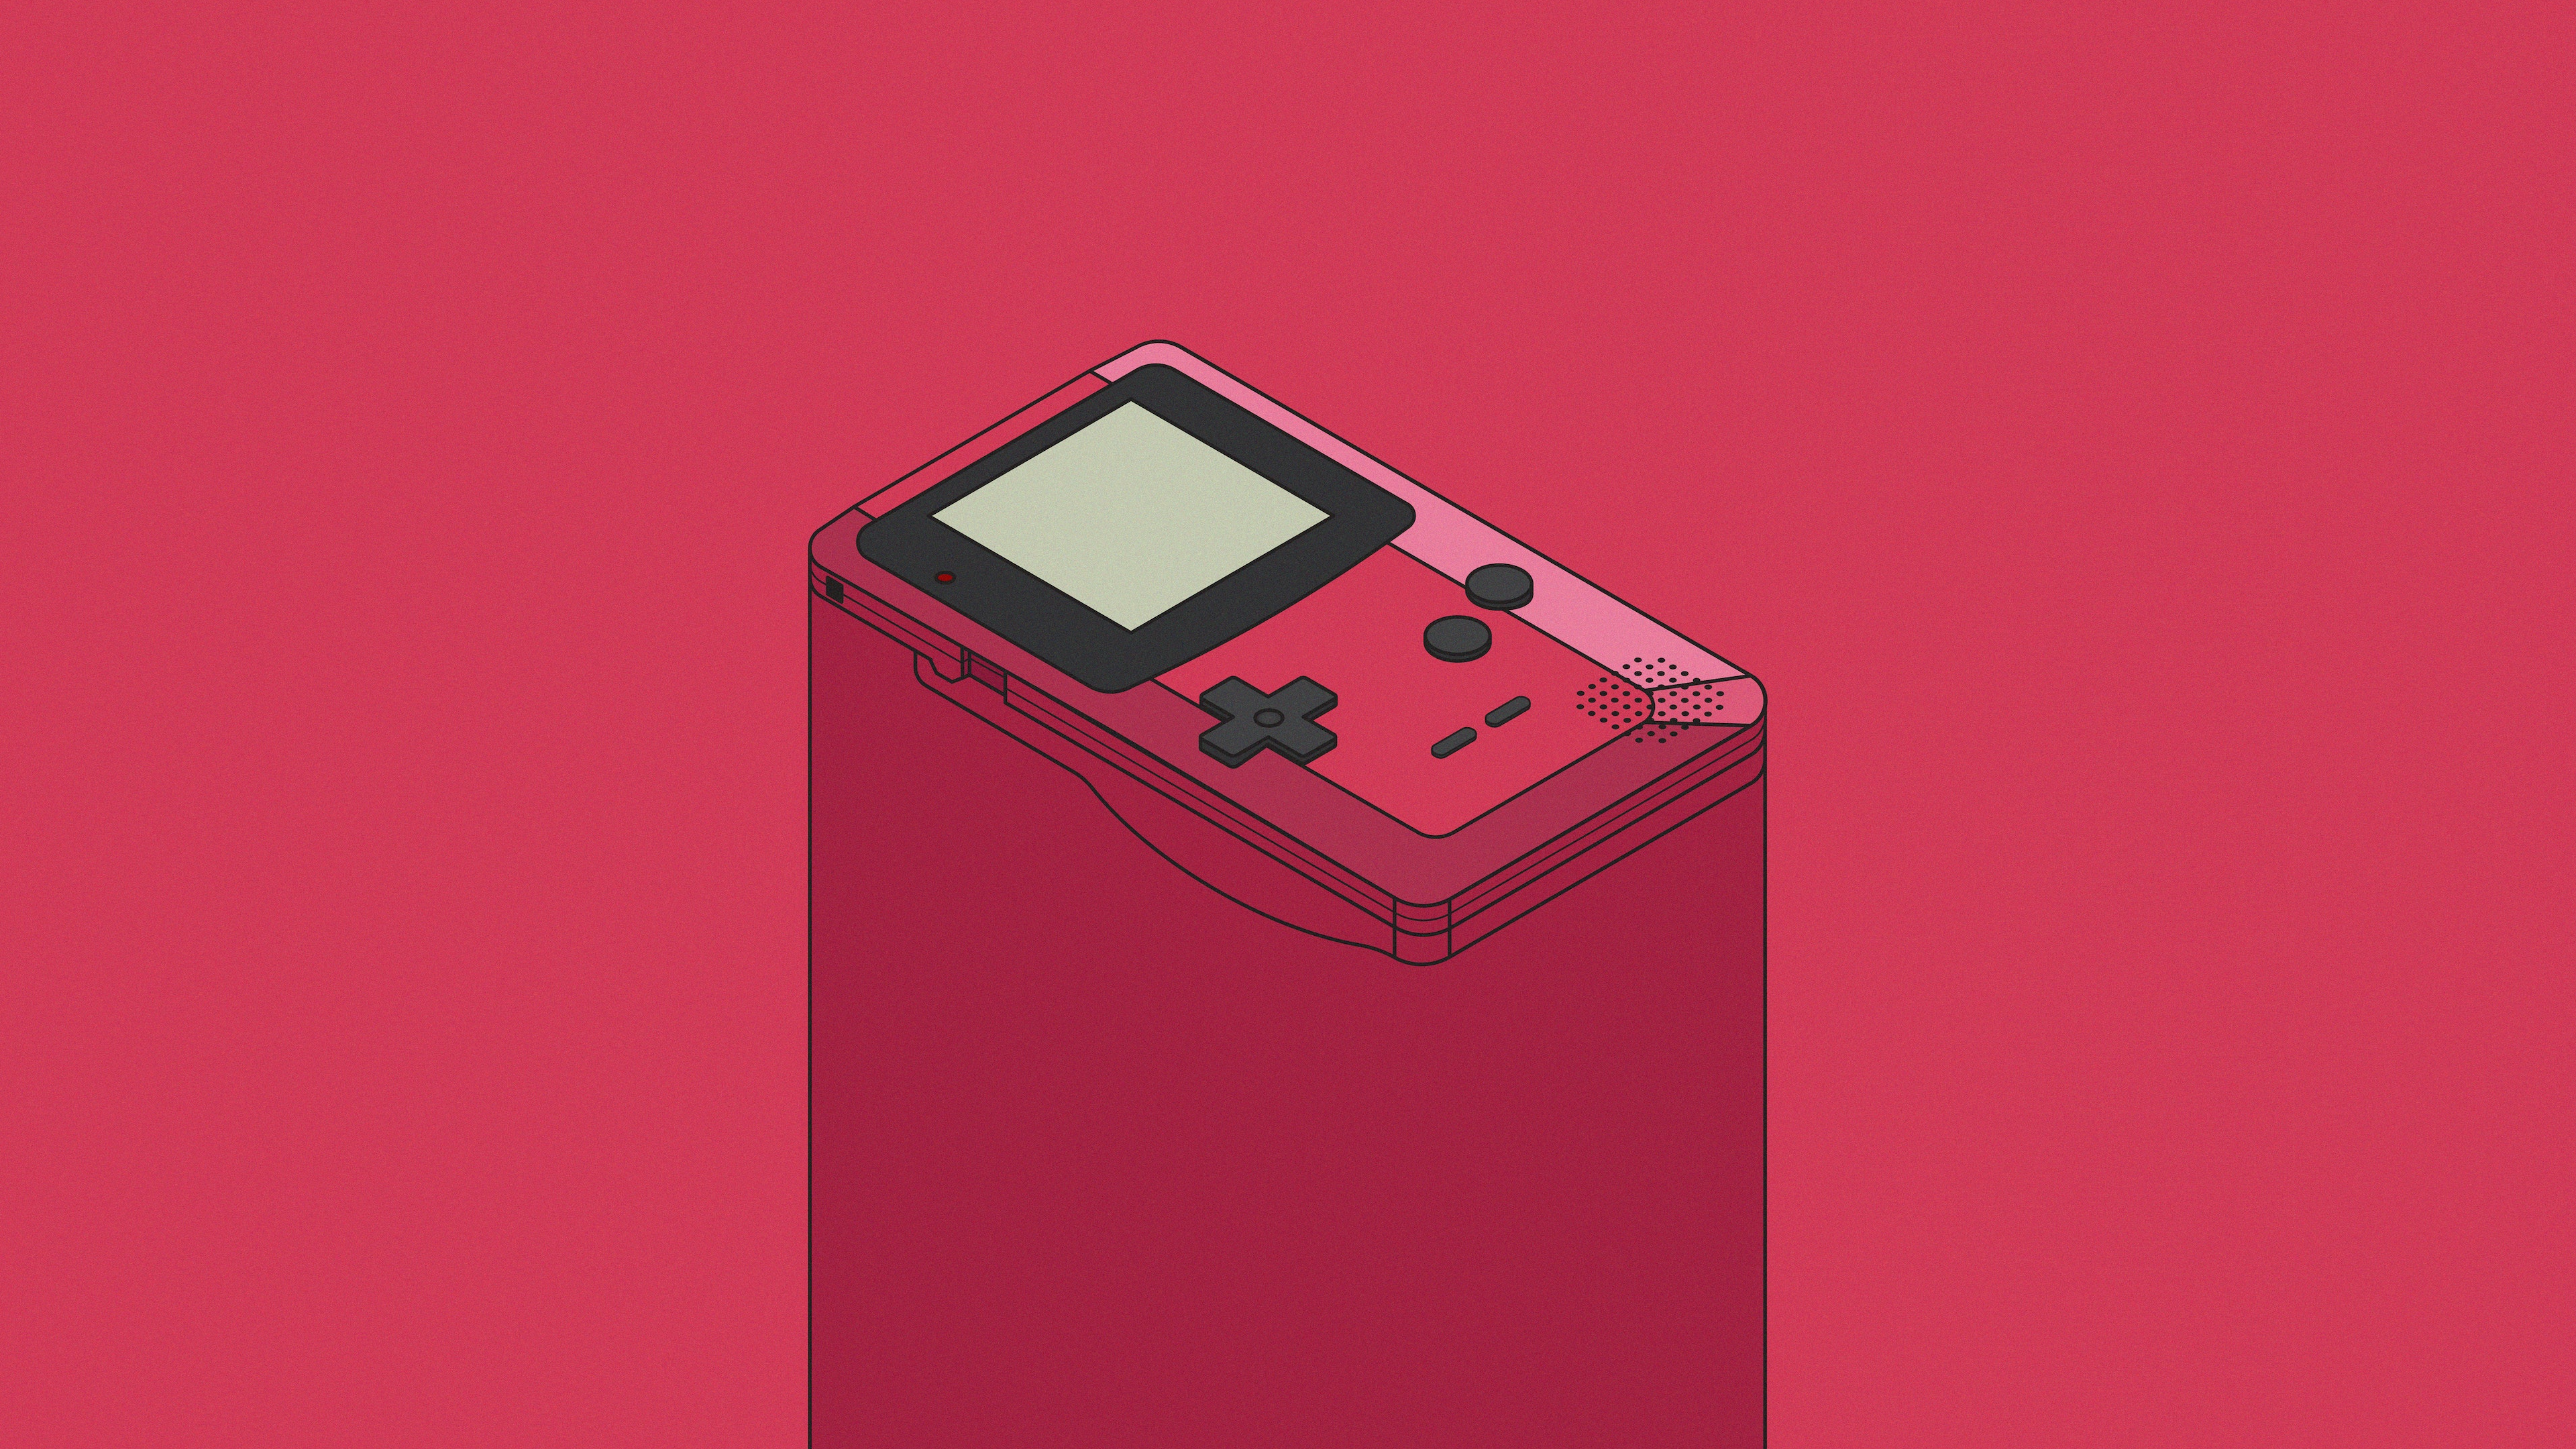 General 3840x2160 digital art artwork illustration minimalism Nintendo GameBoy Color consoles shadow 4K simple background red background